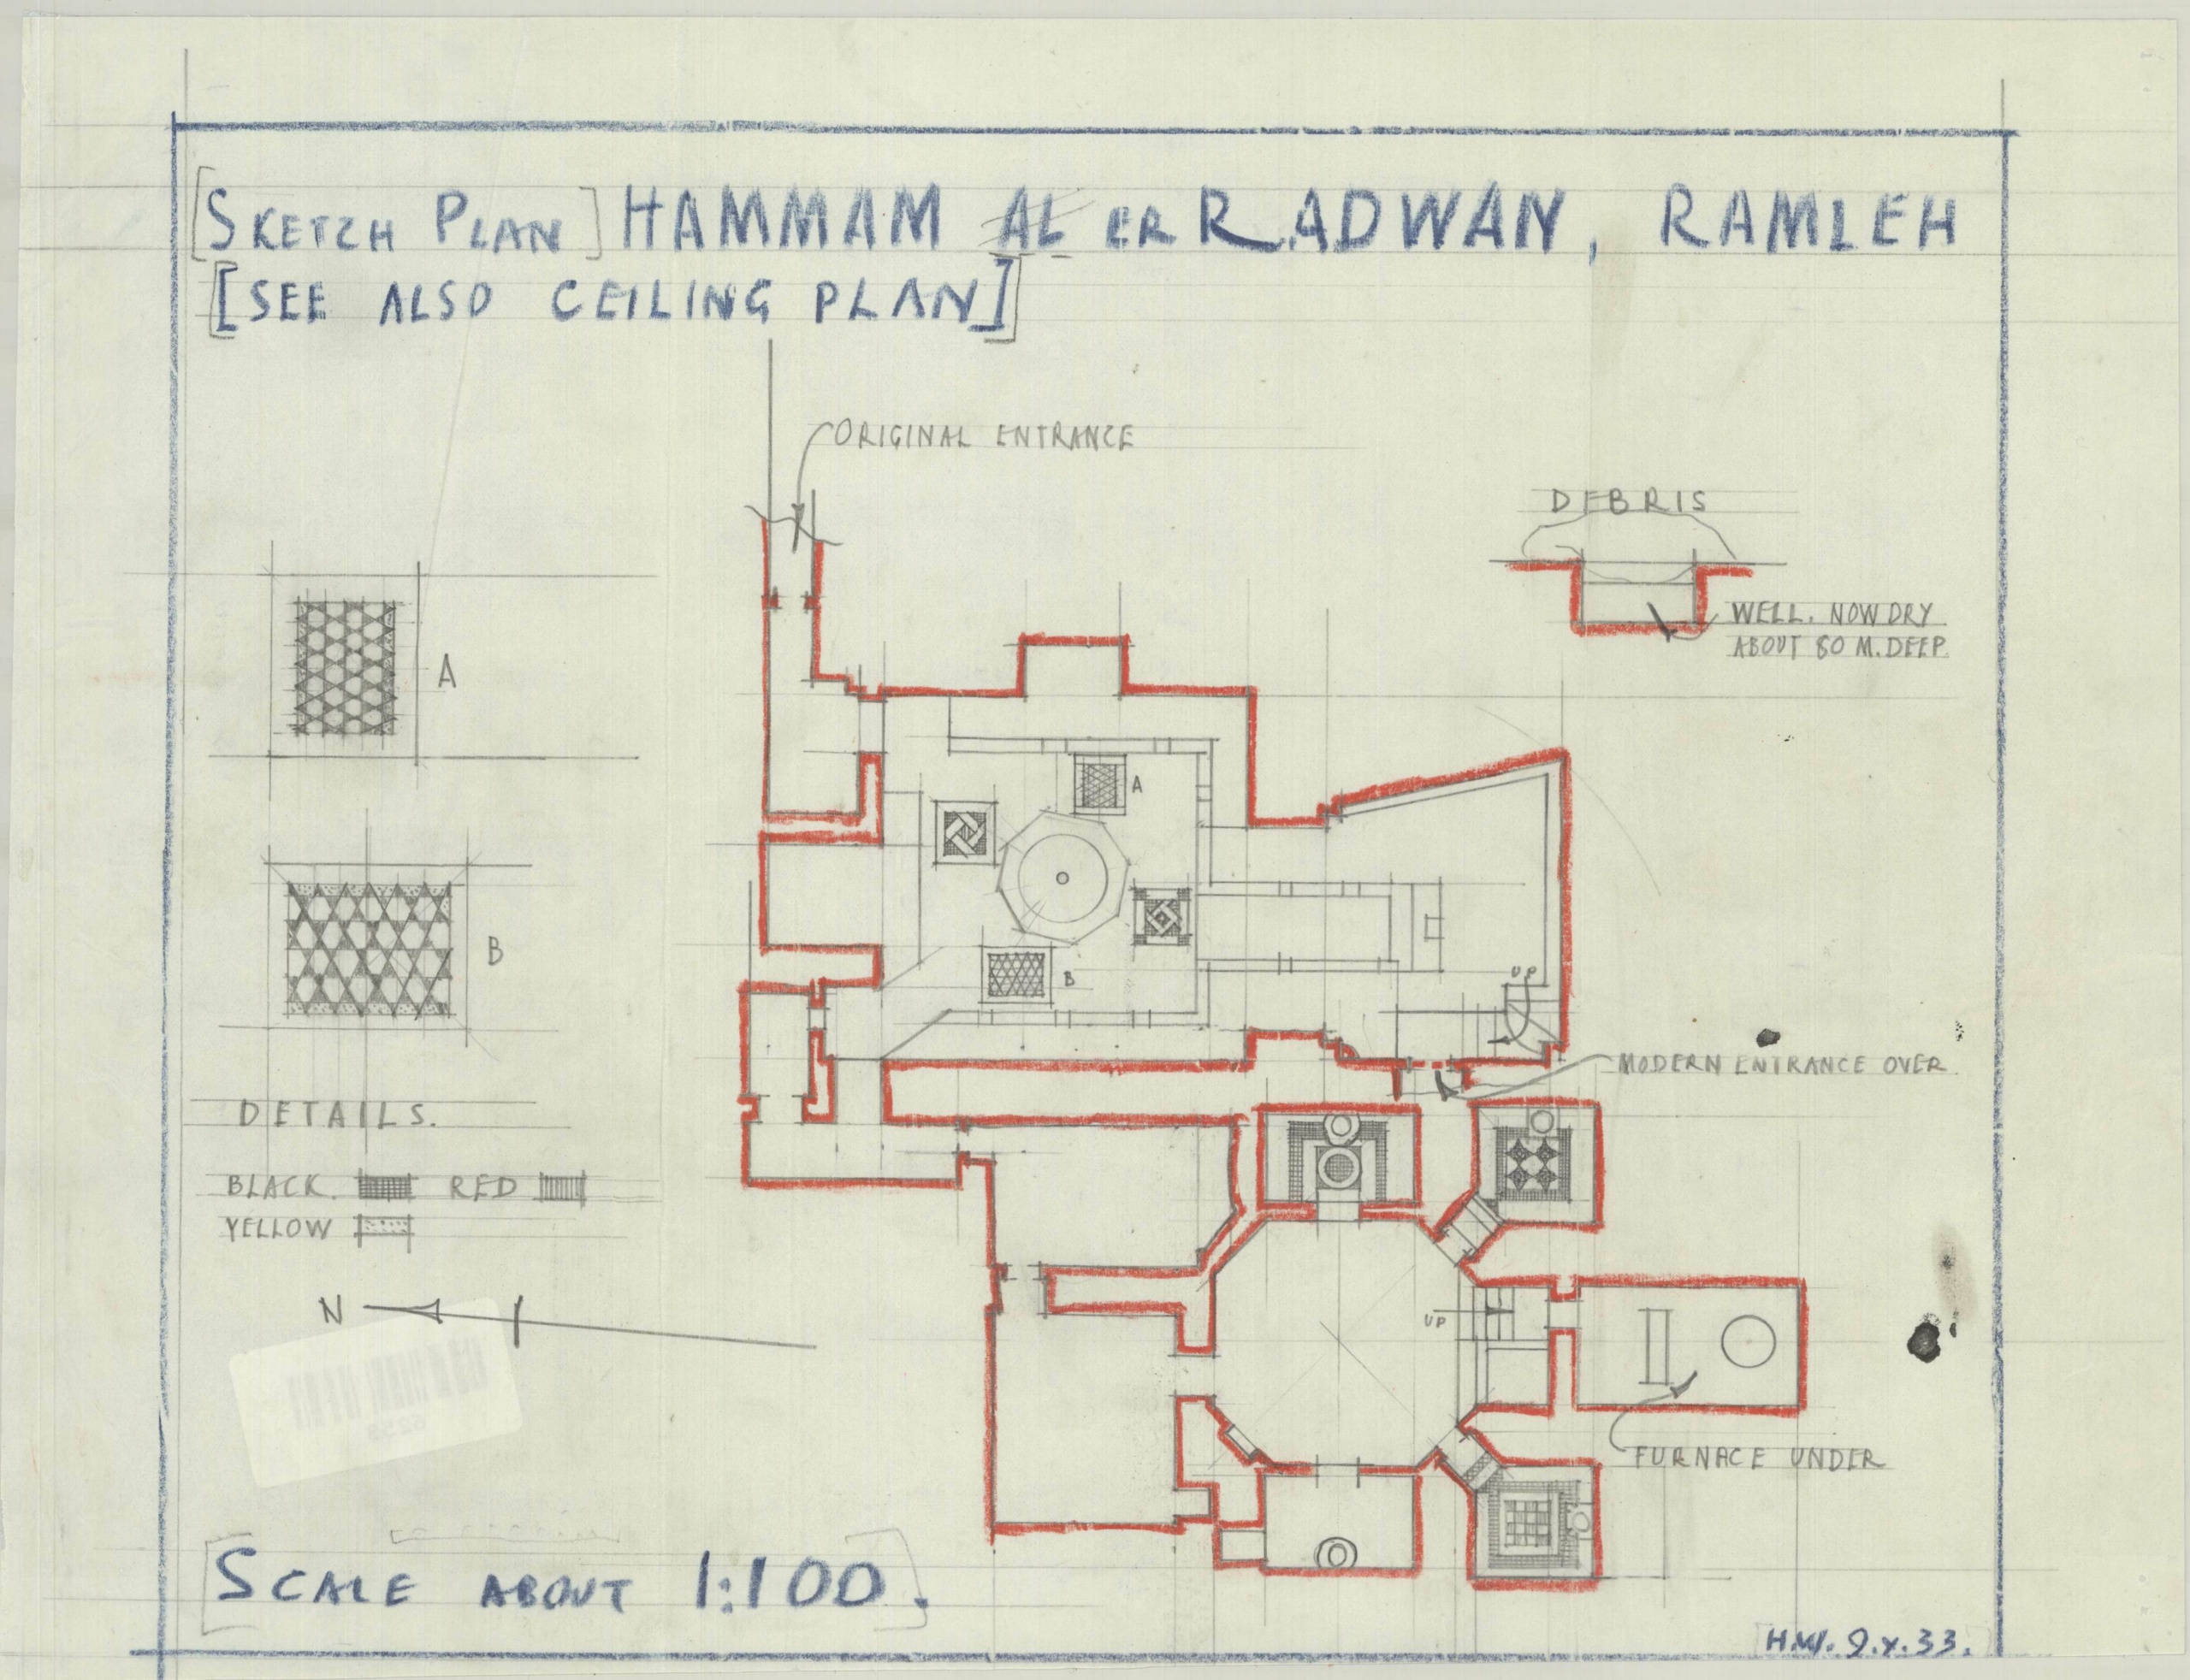 Sketch plan Hammam er Radwan Ramleh